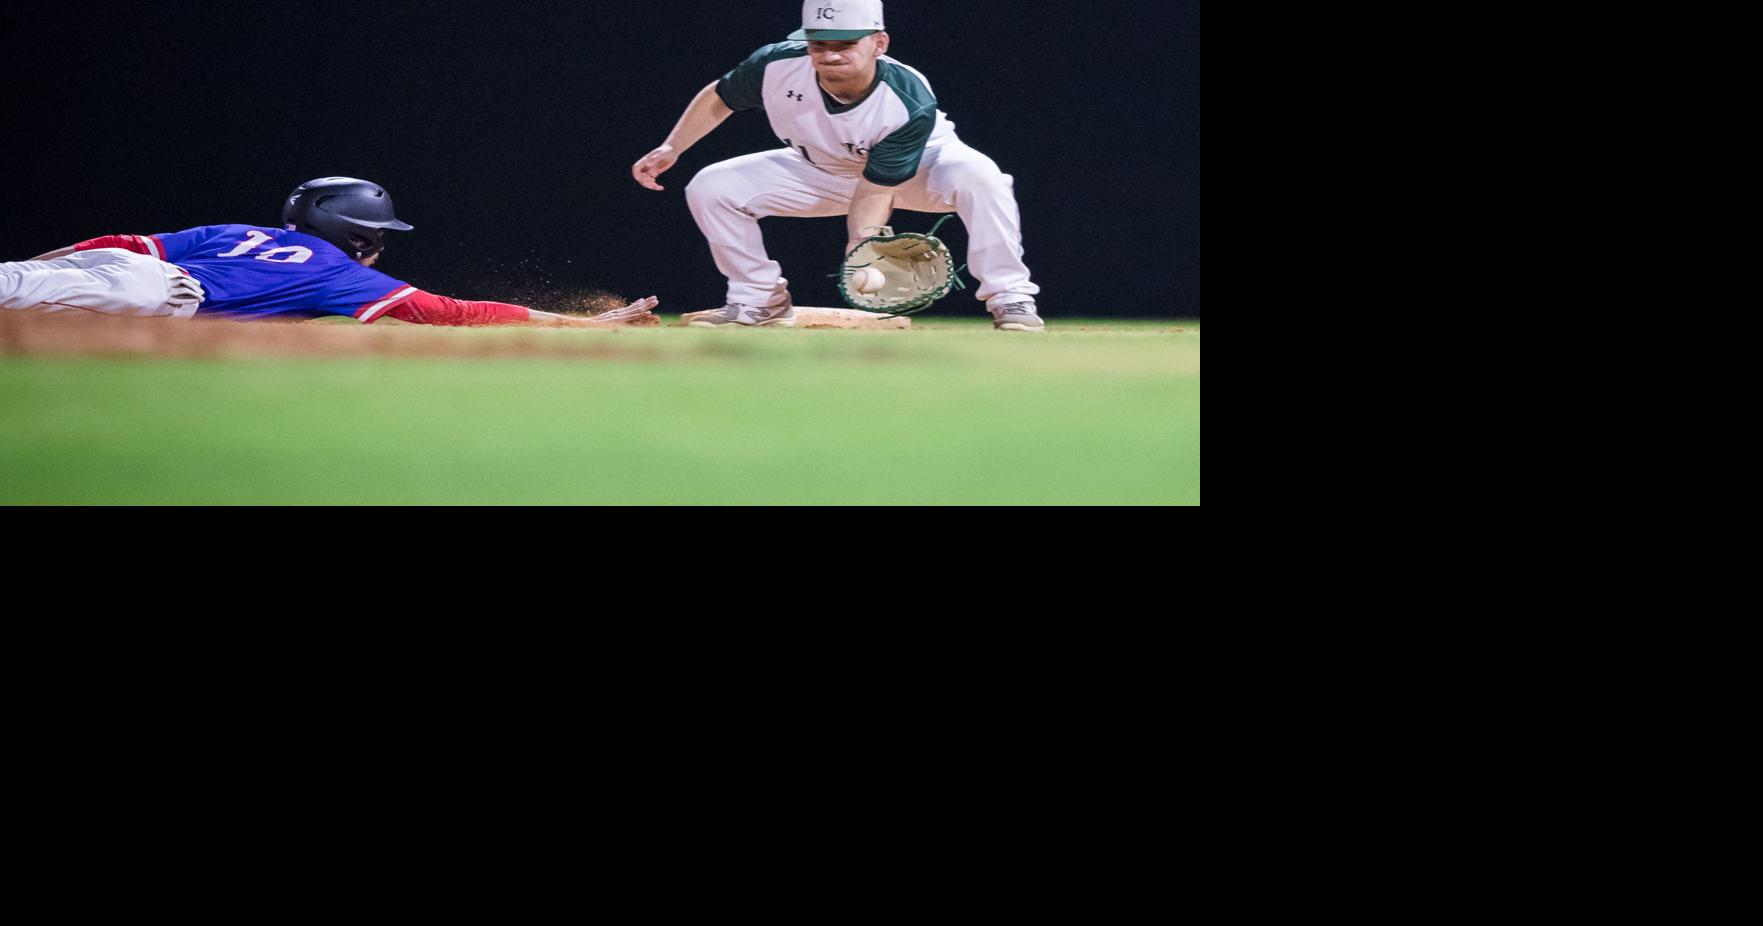 Expos Organization keeps local baseball talent in Brazoria County, Sports